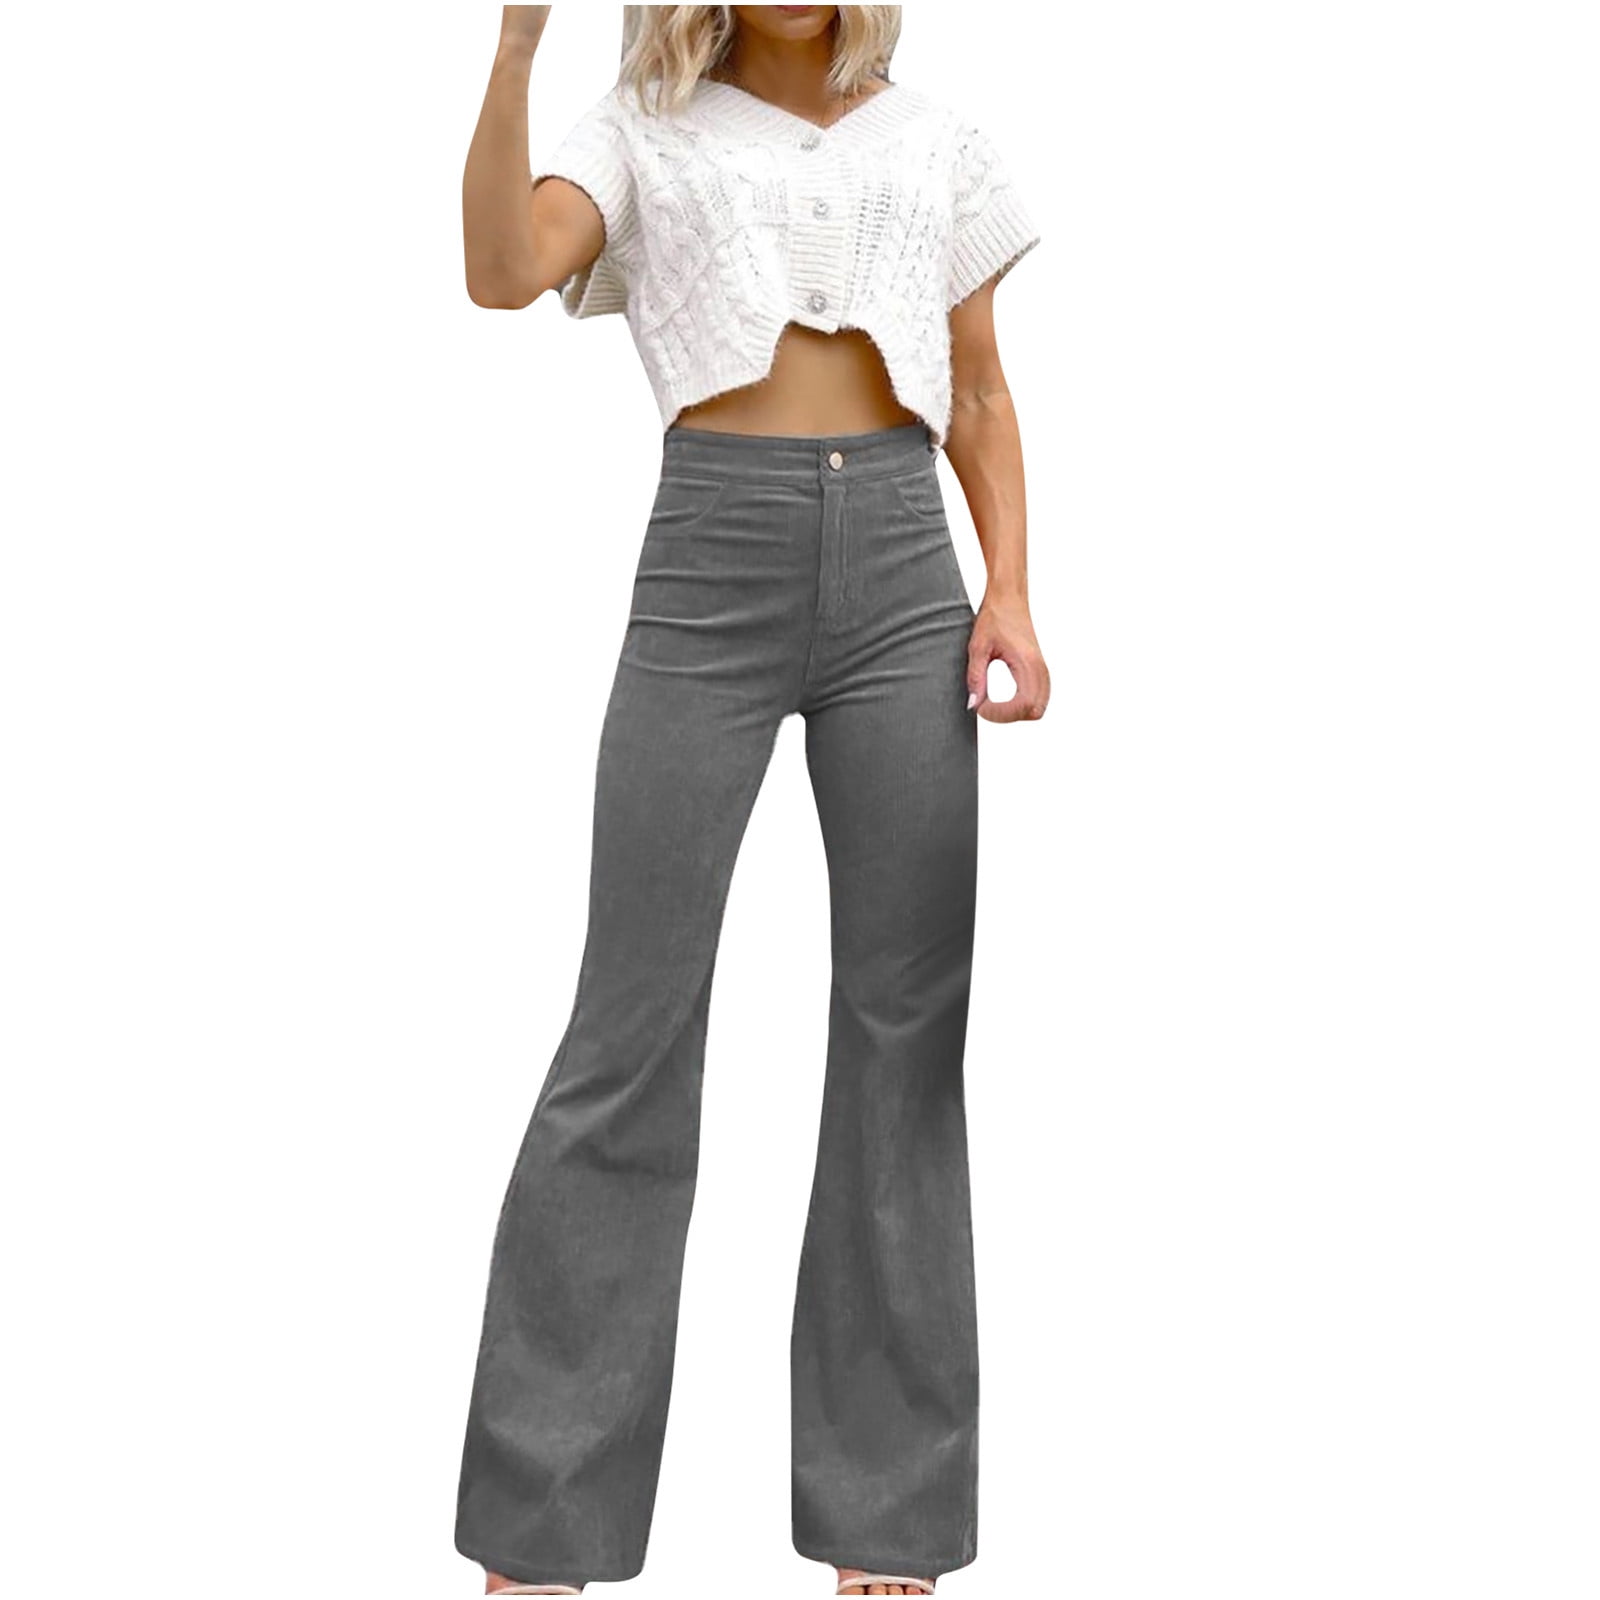 Hfyihgf Women Elegant Corduroy Flare Pants Elastic High Waist Vintage Bell  Bottom Trousers with Pockets(Gray,3XL)